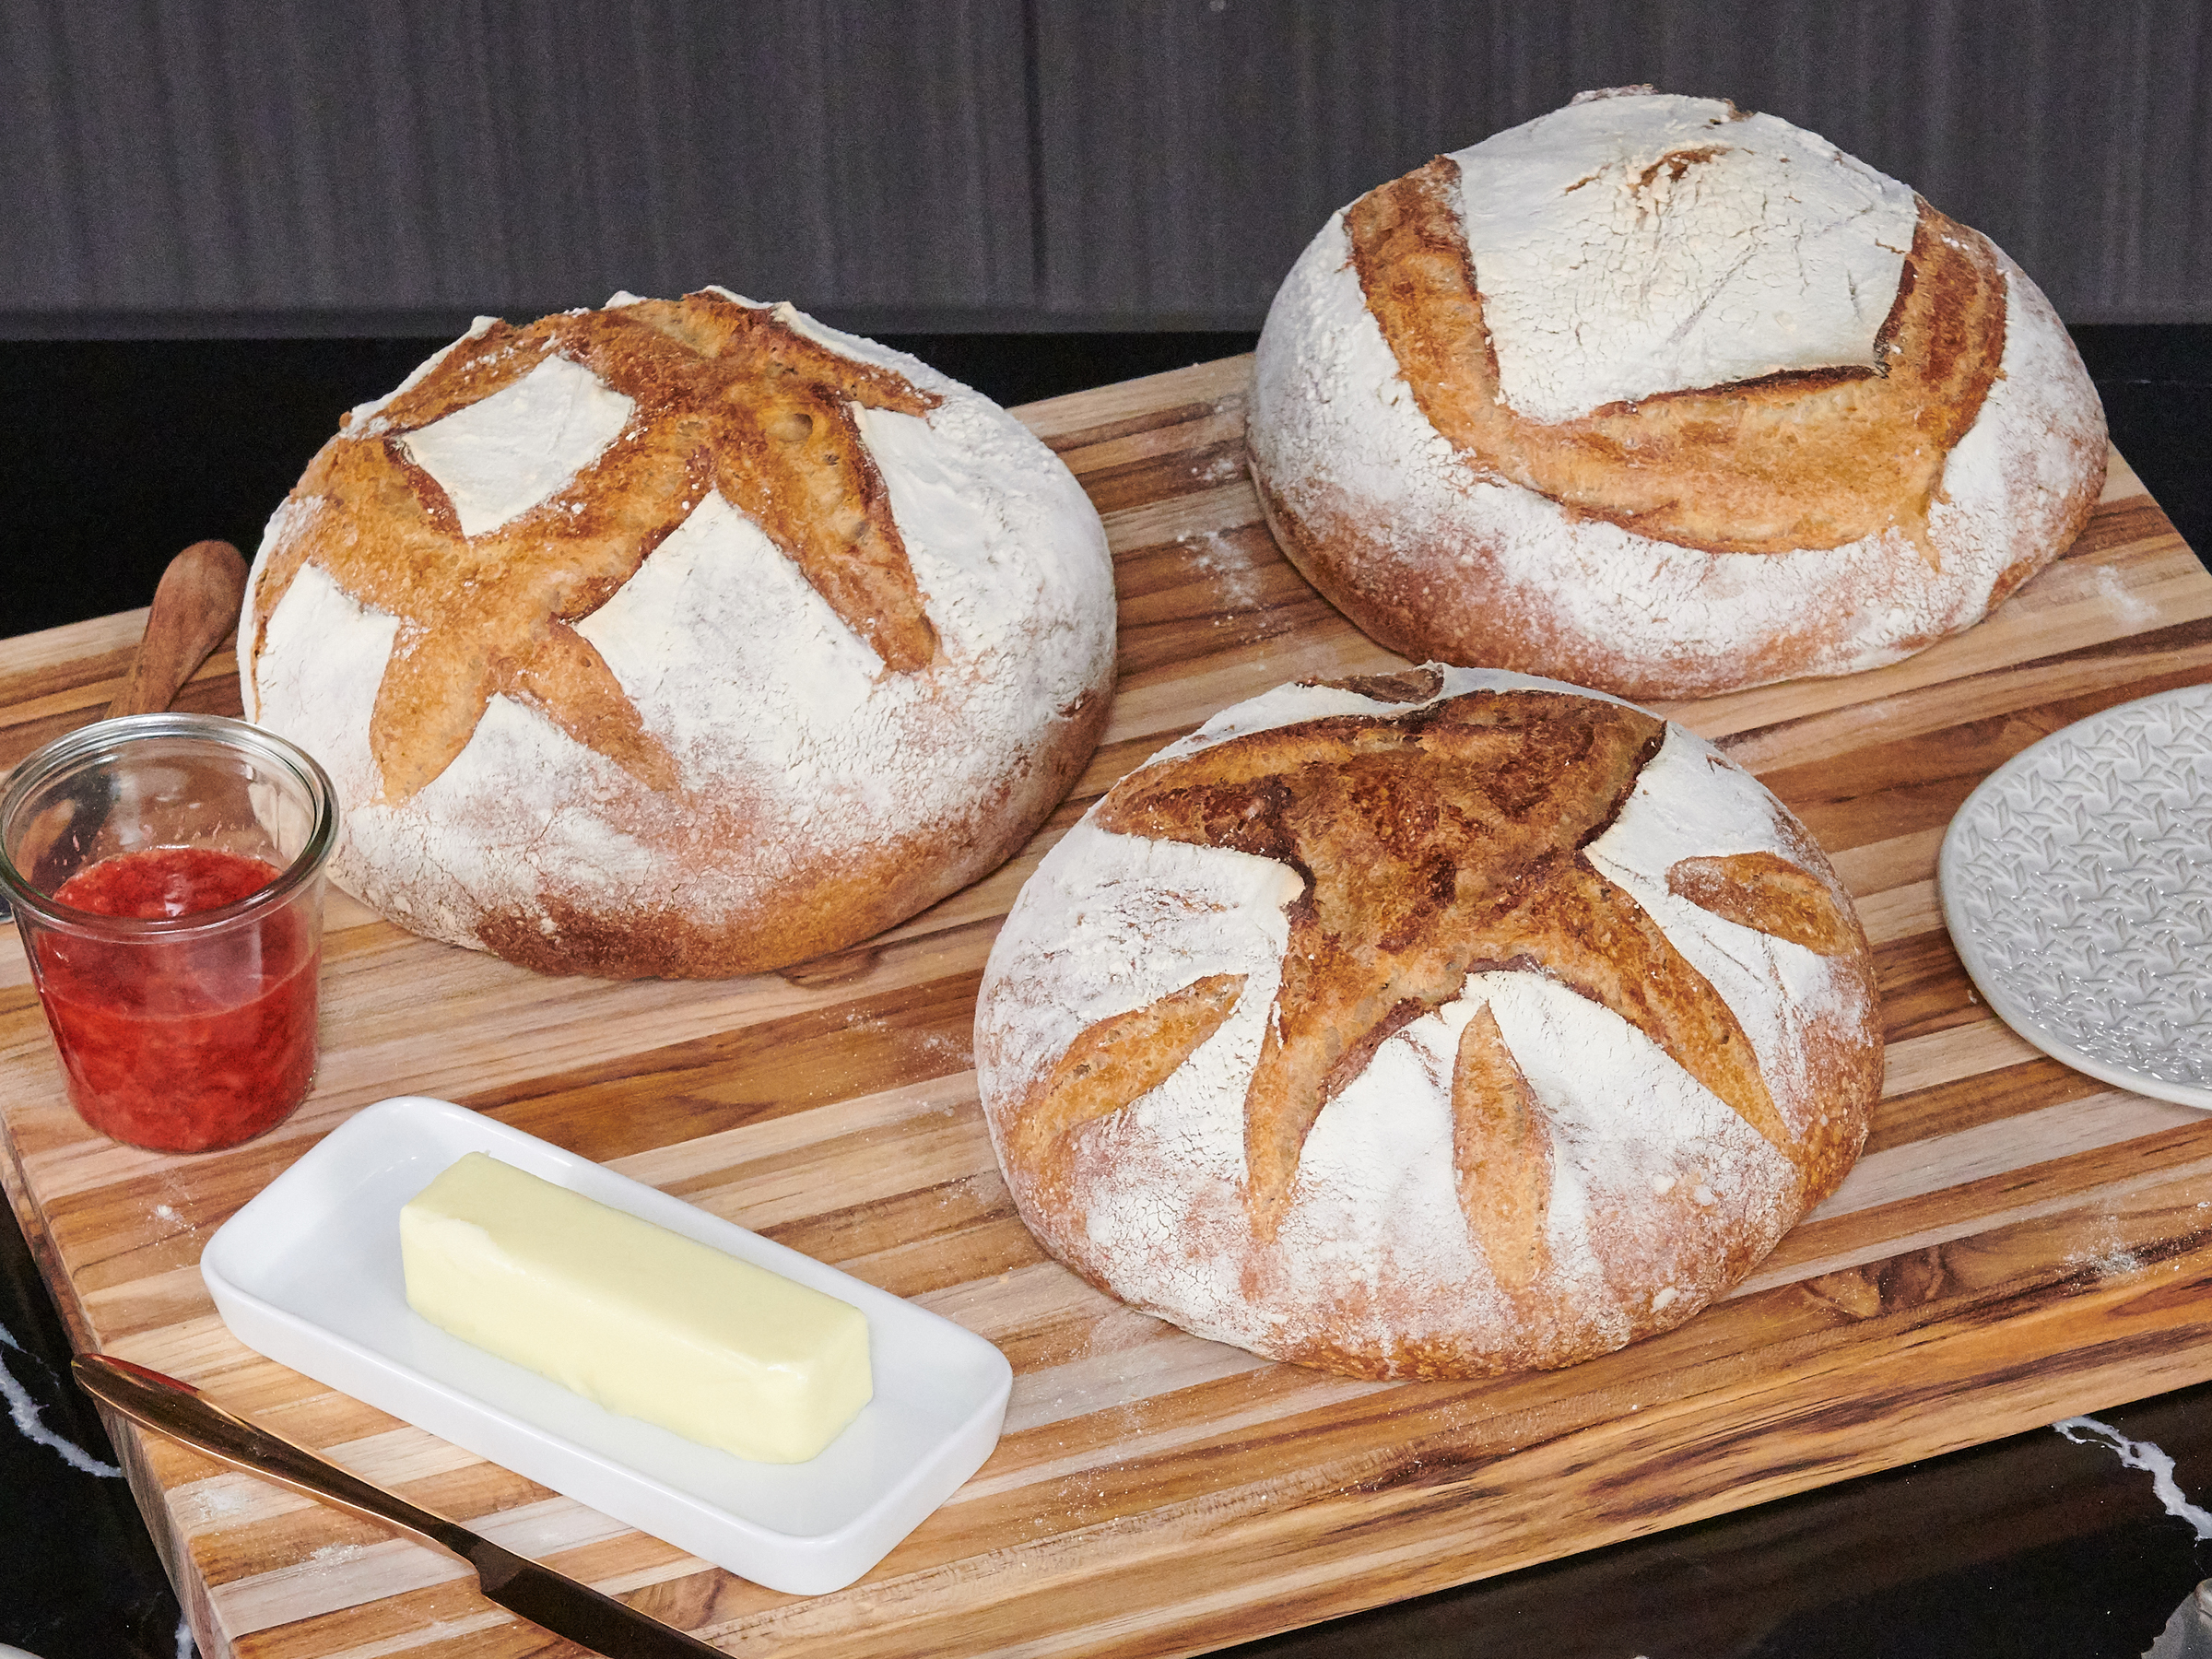 https://www.foodnetwork.com/content/dam/images/food/fullset/2019/6/11/0/FantasyKitchen2019_Sourdough-Bread-beauty.jpg